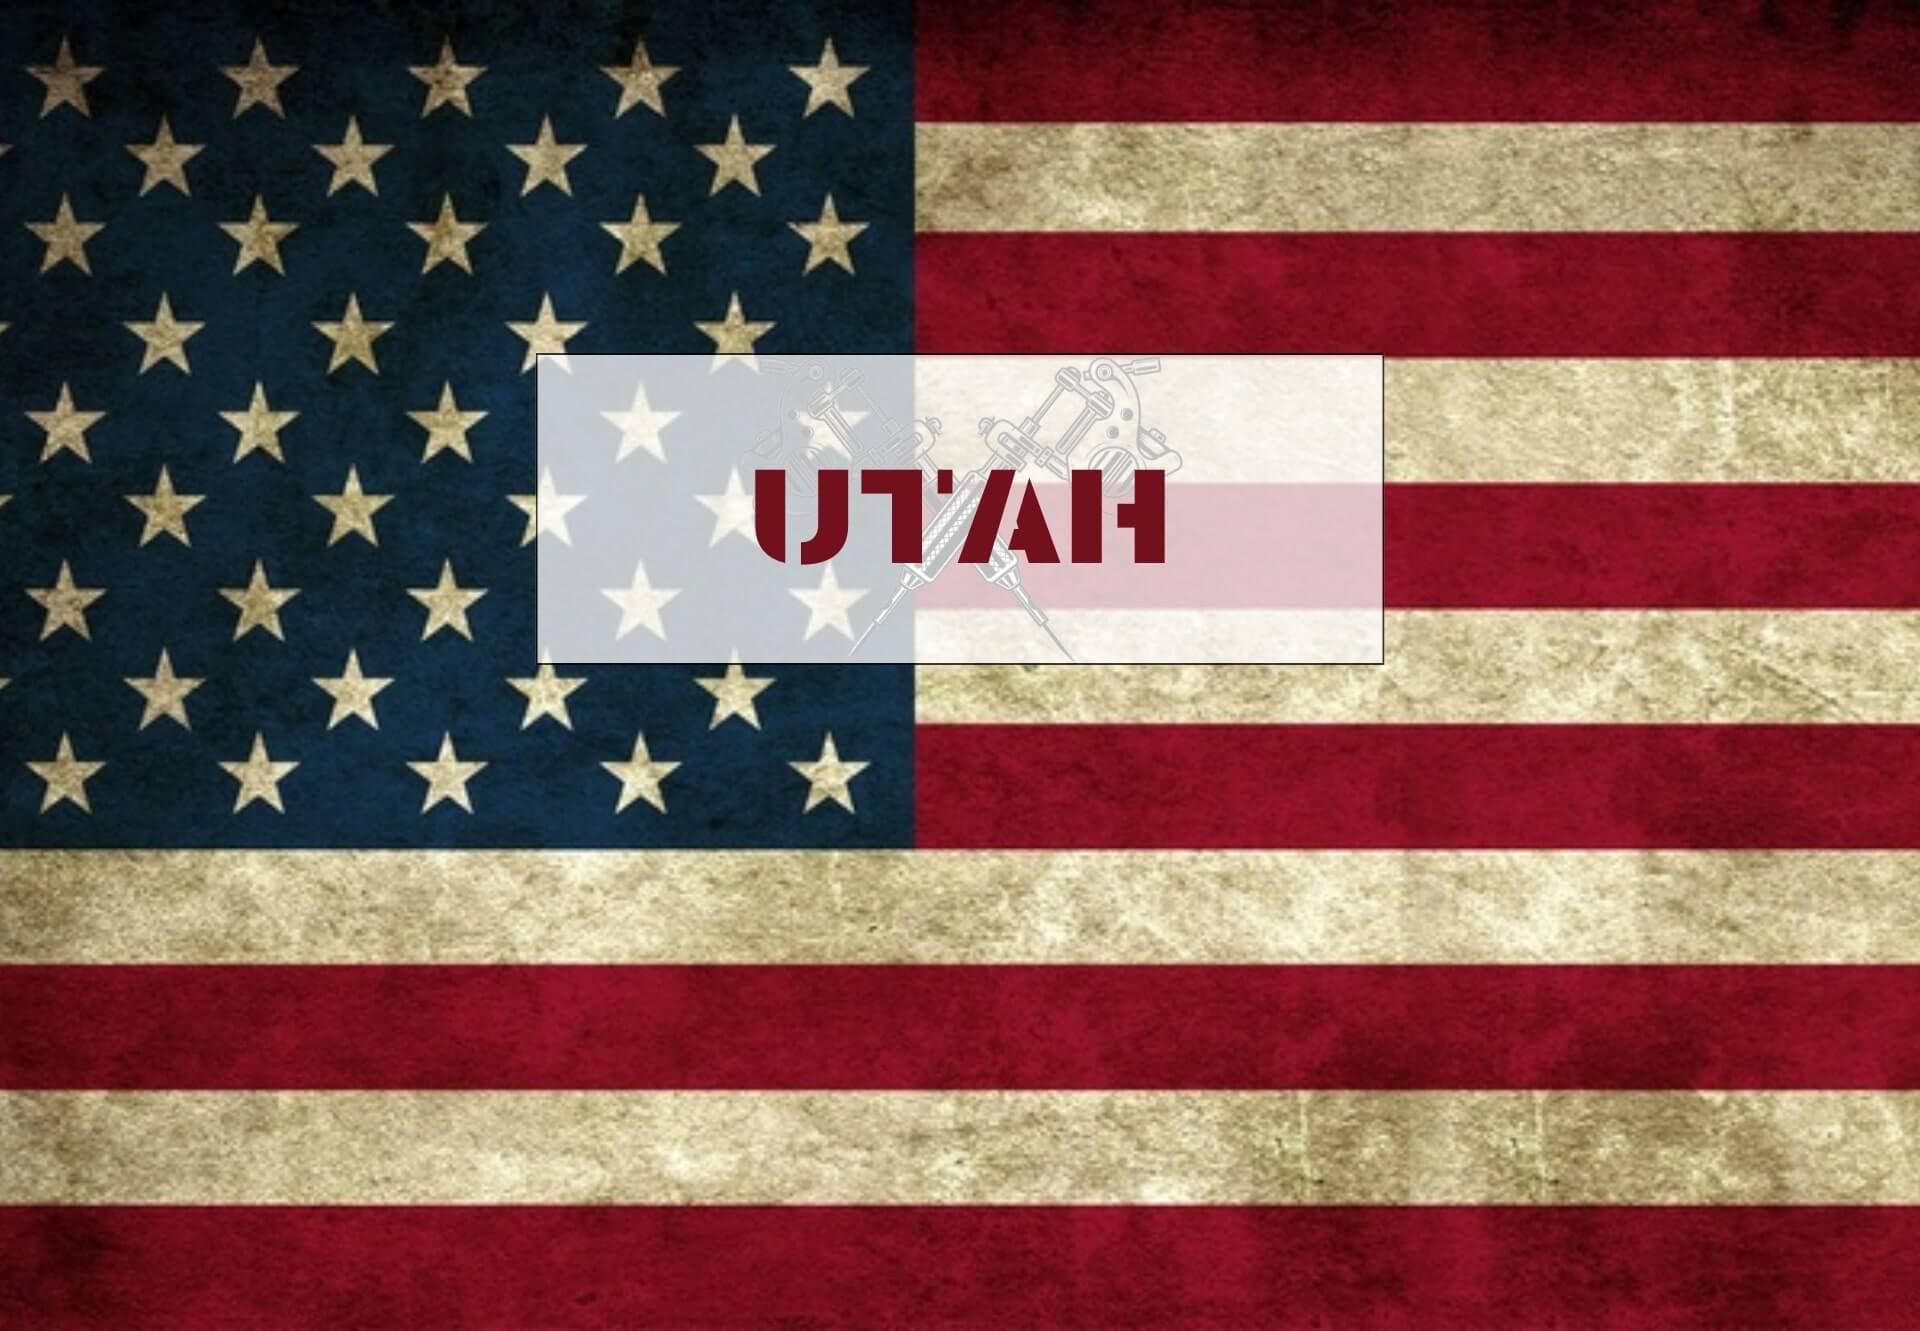 Utah Tattoo Laws - featured image